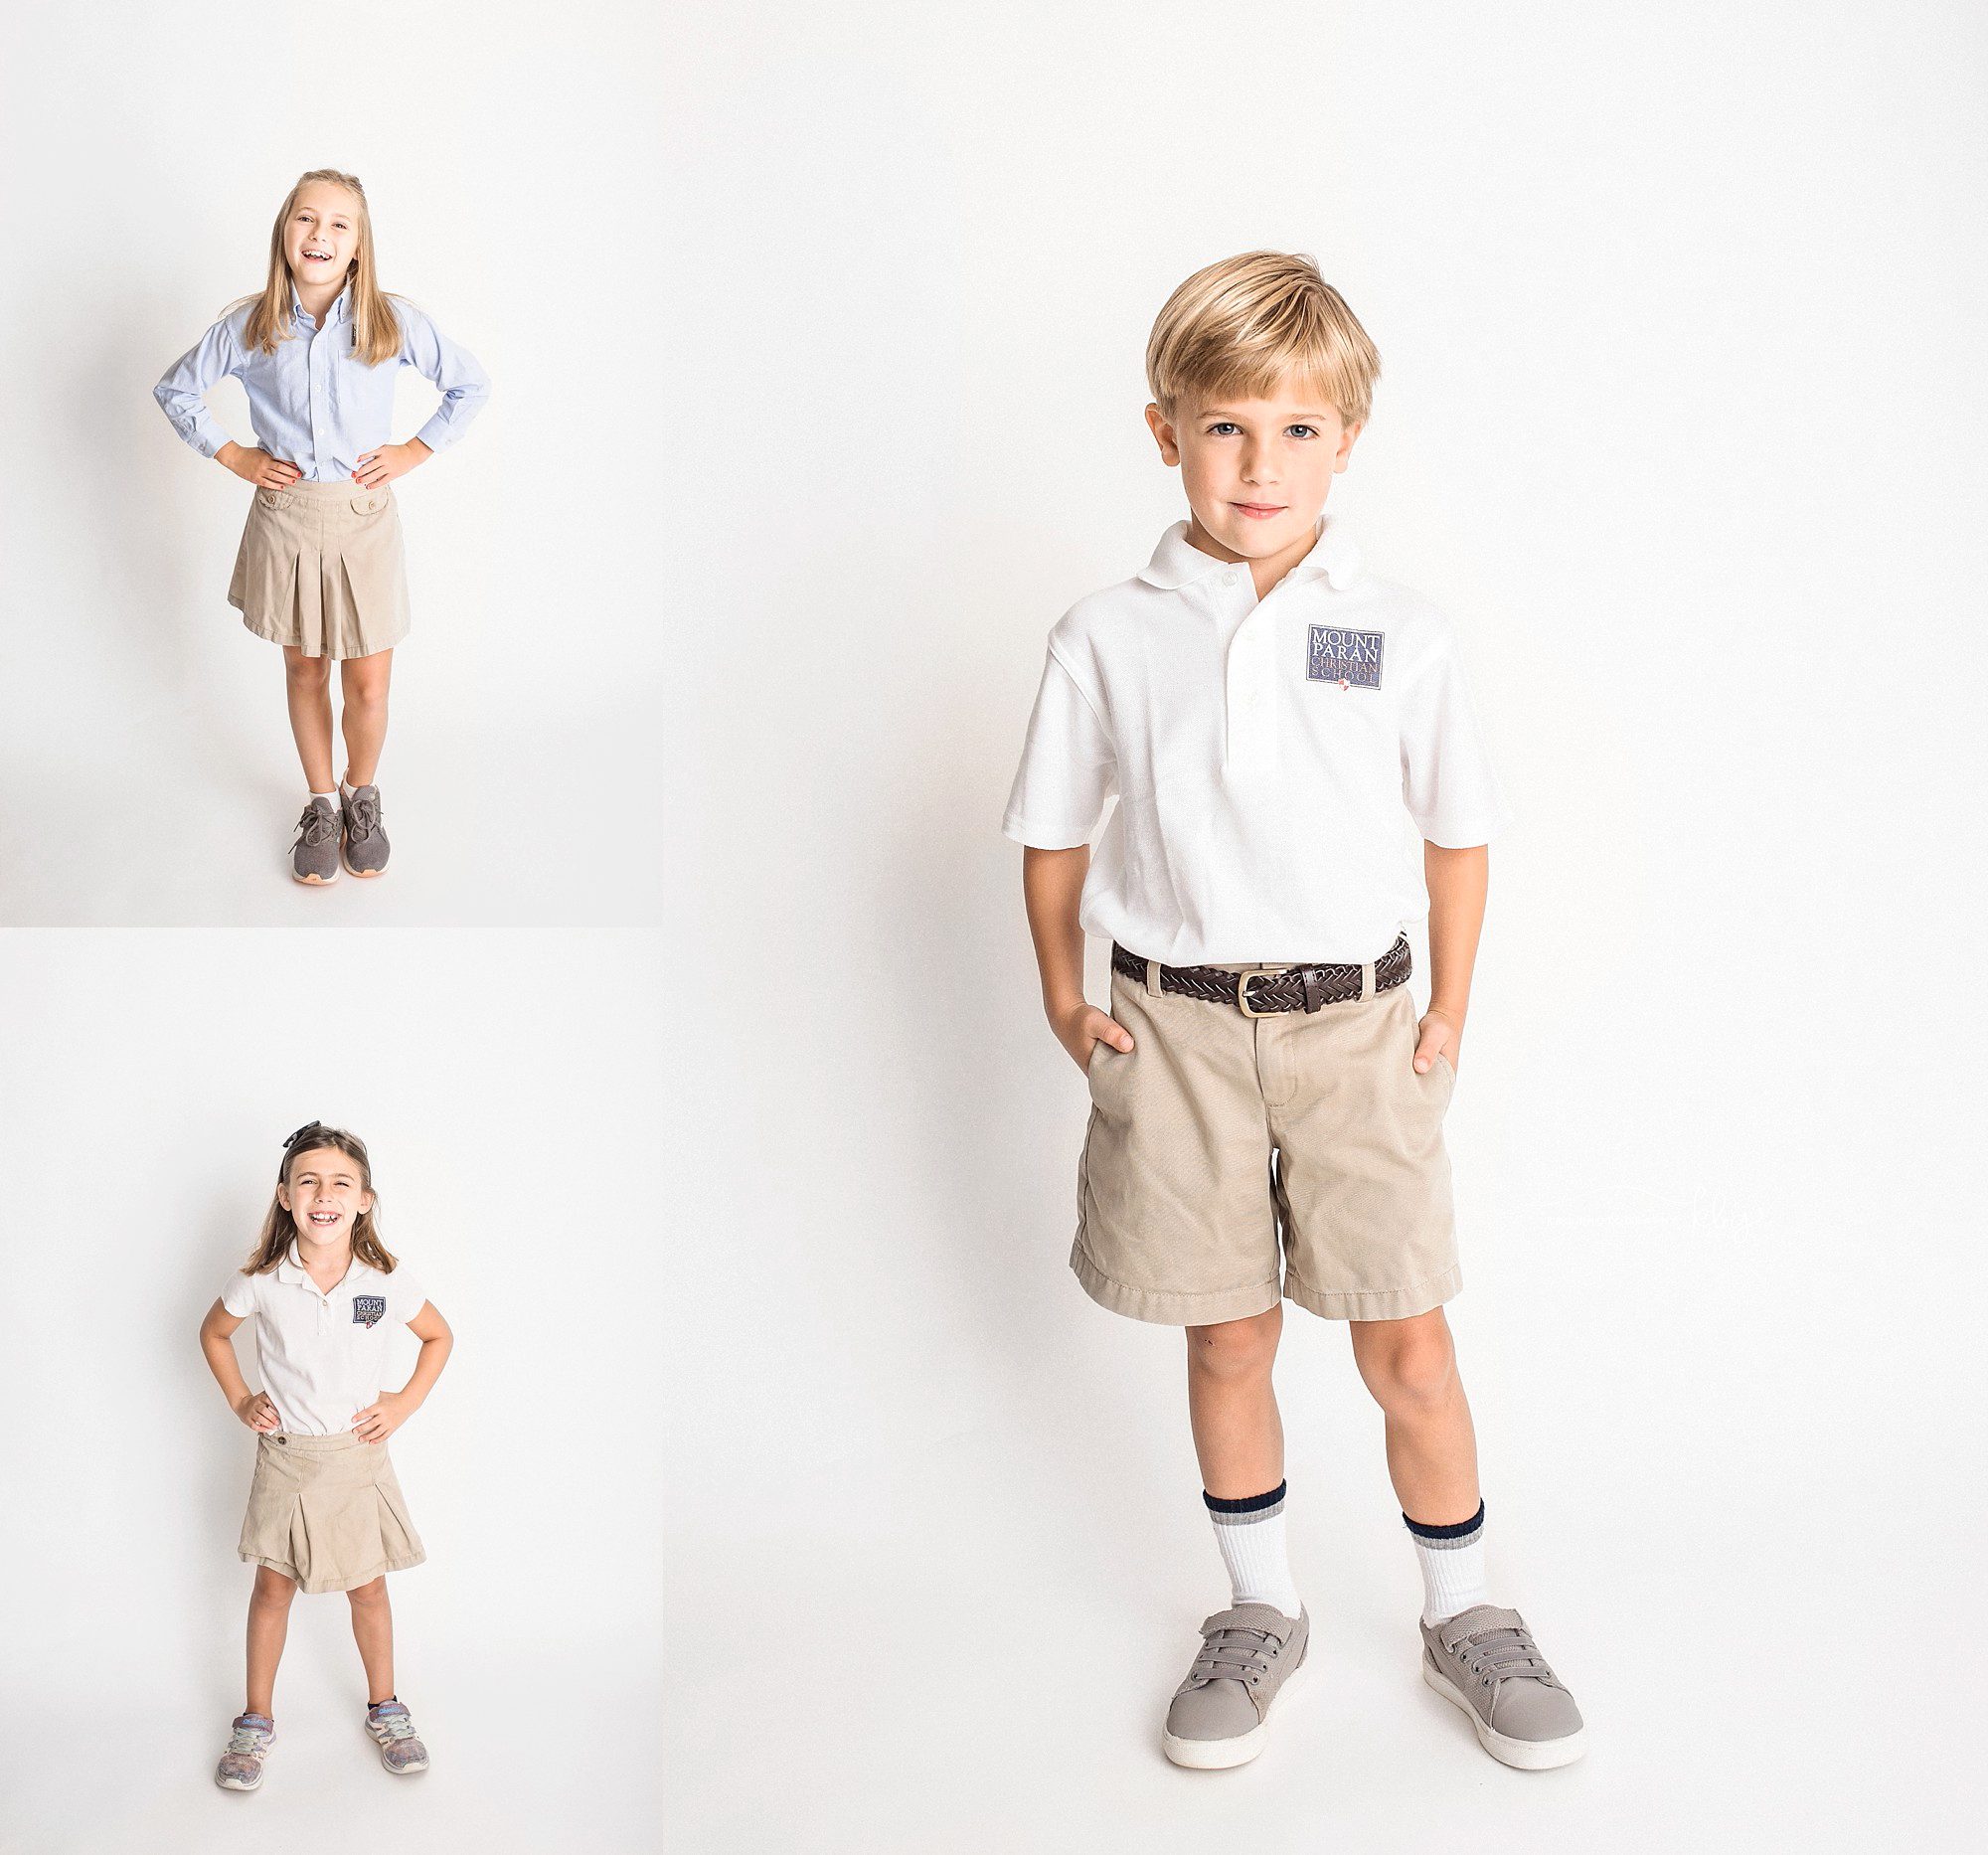 Atlanta Child Photographer - studio portraits of children in school uniforms